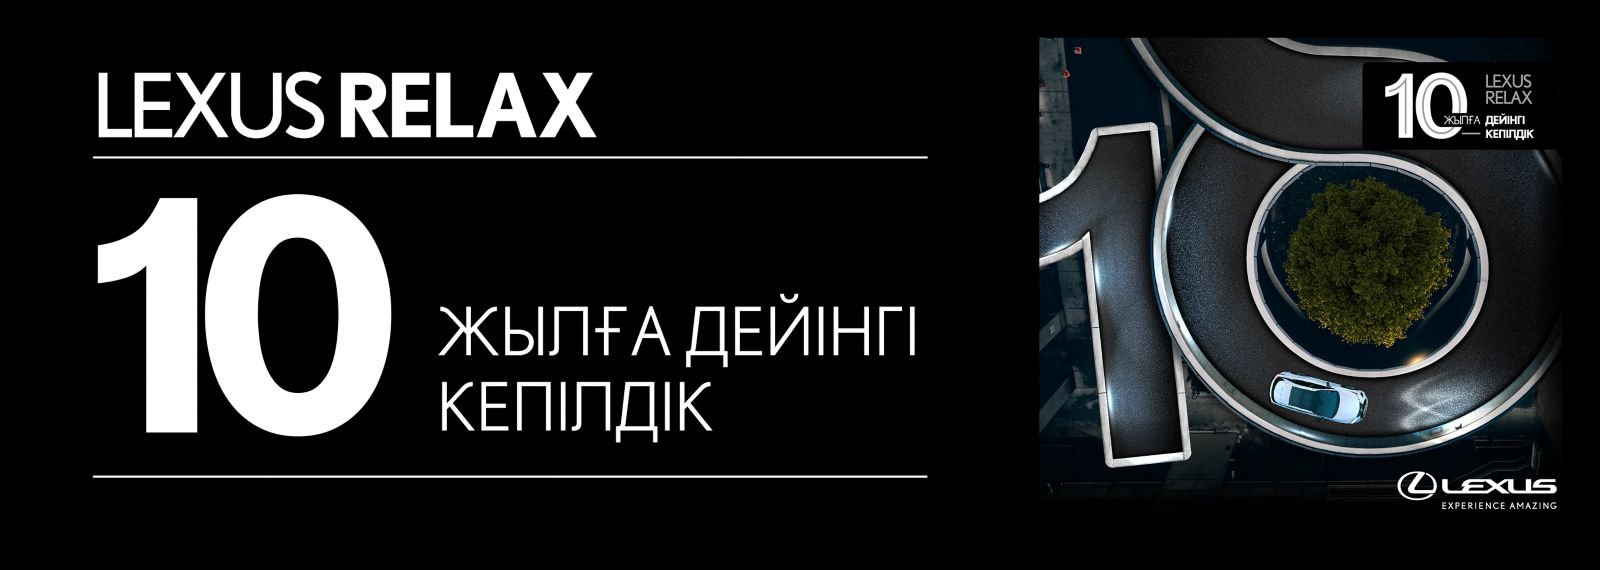 Lexus_Relax_kk